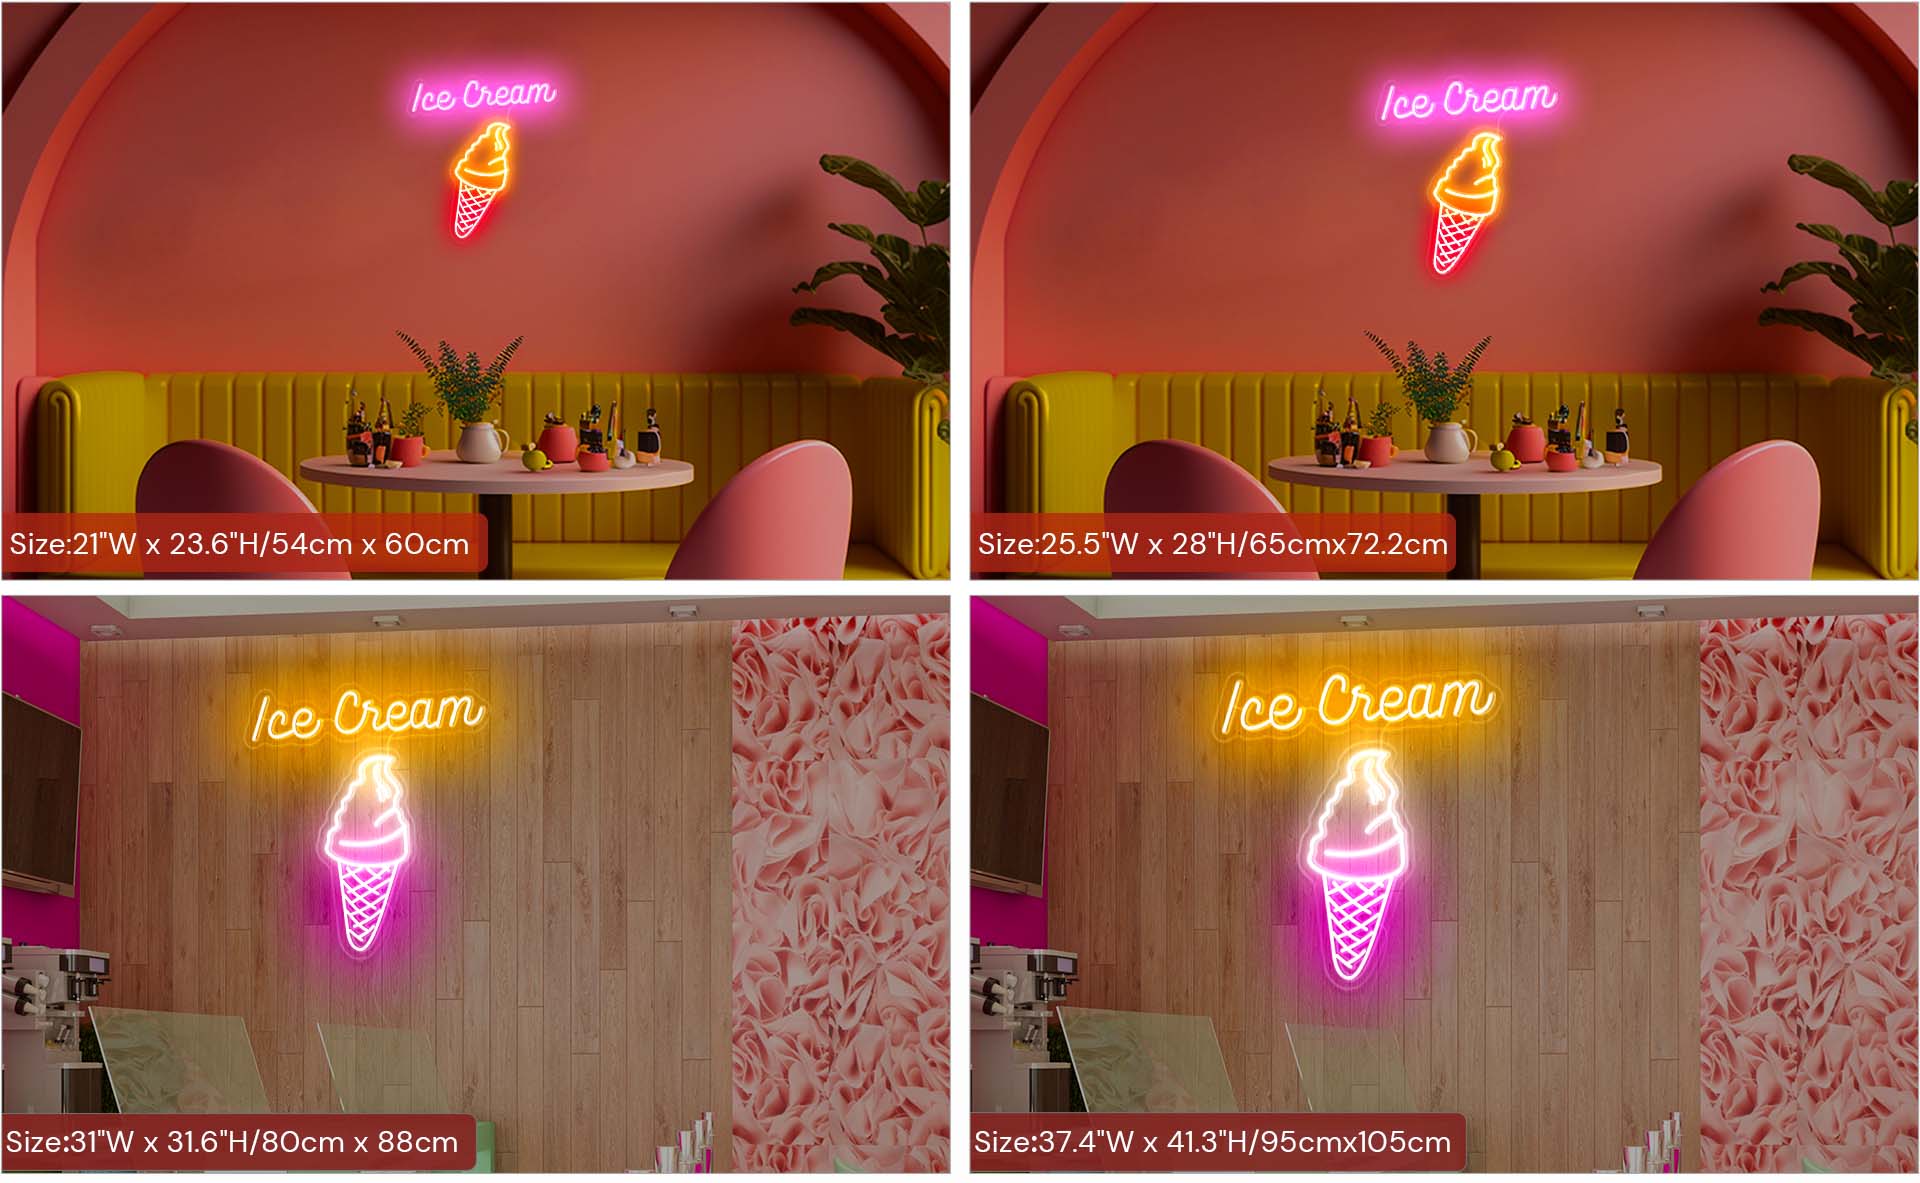 ice cream neon light